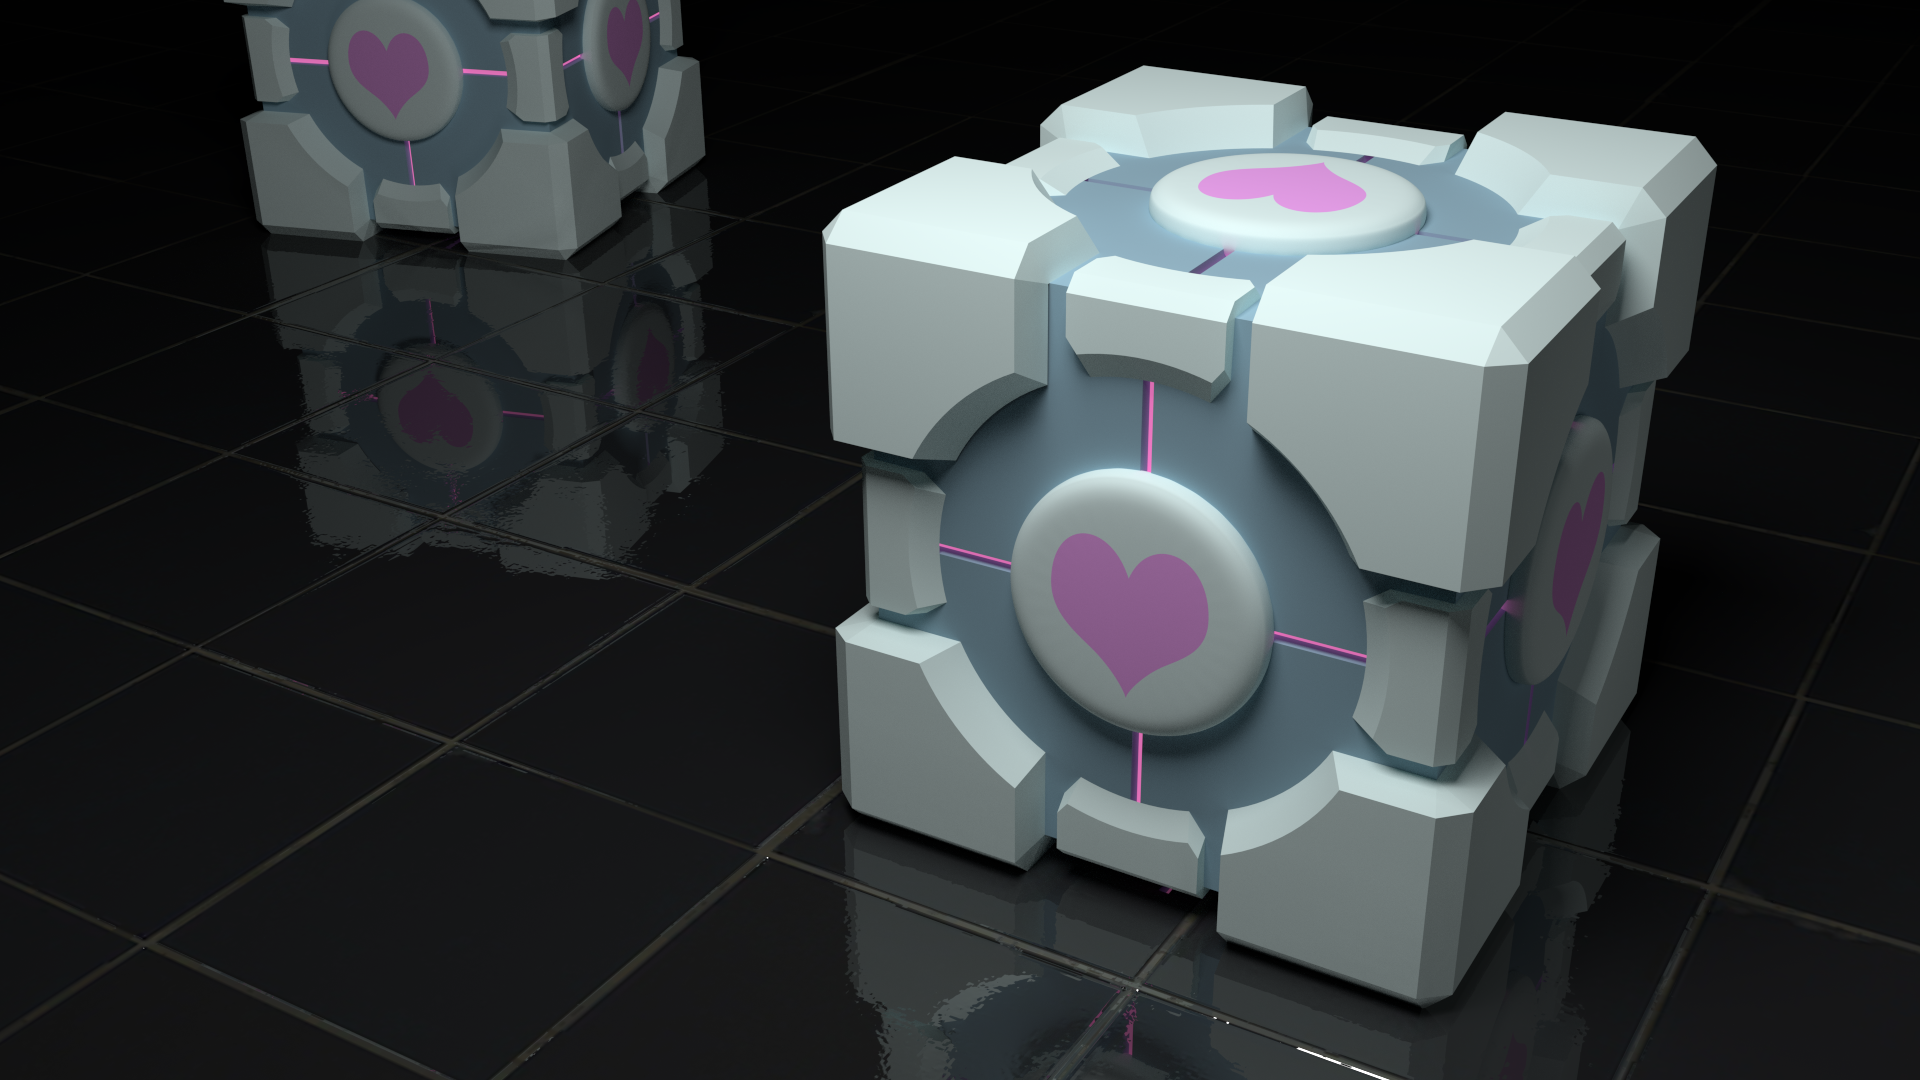 Portal cube. Portal 2 Cube Companion. Куб из Portal 2. Куб компаньон из портал 2. Кубы компаньоны портал 2.